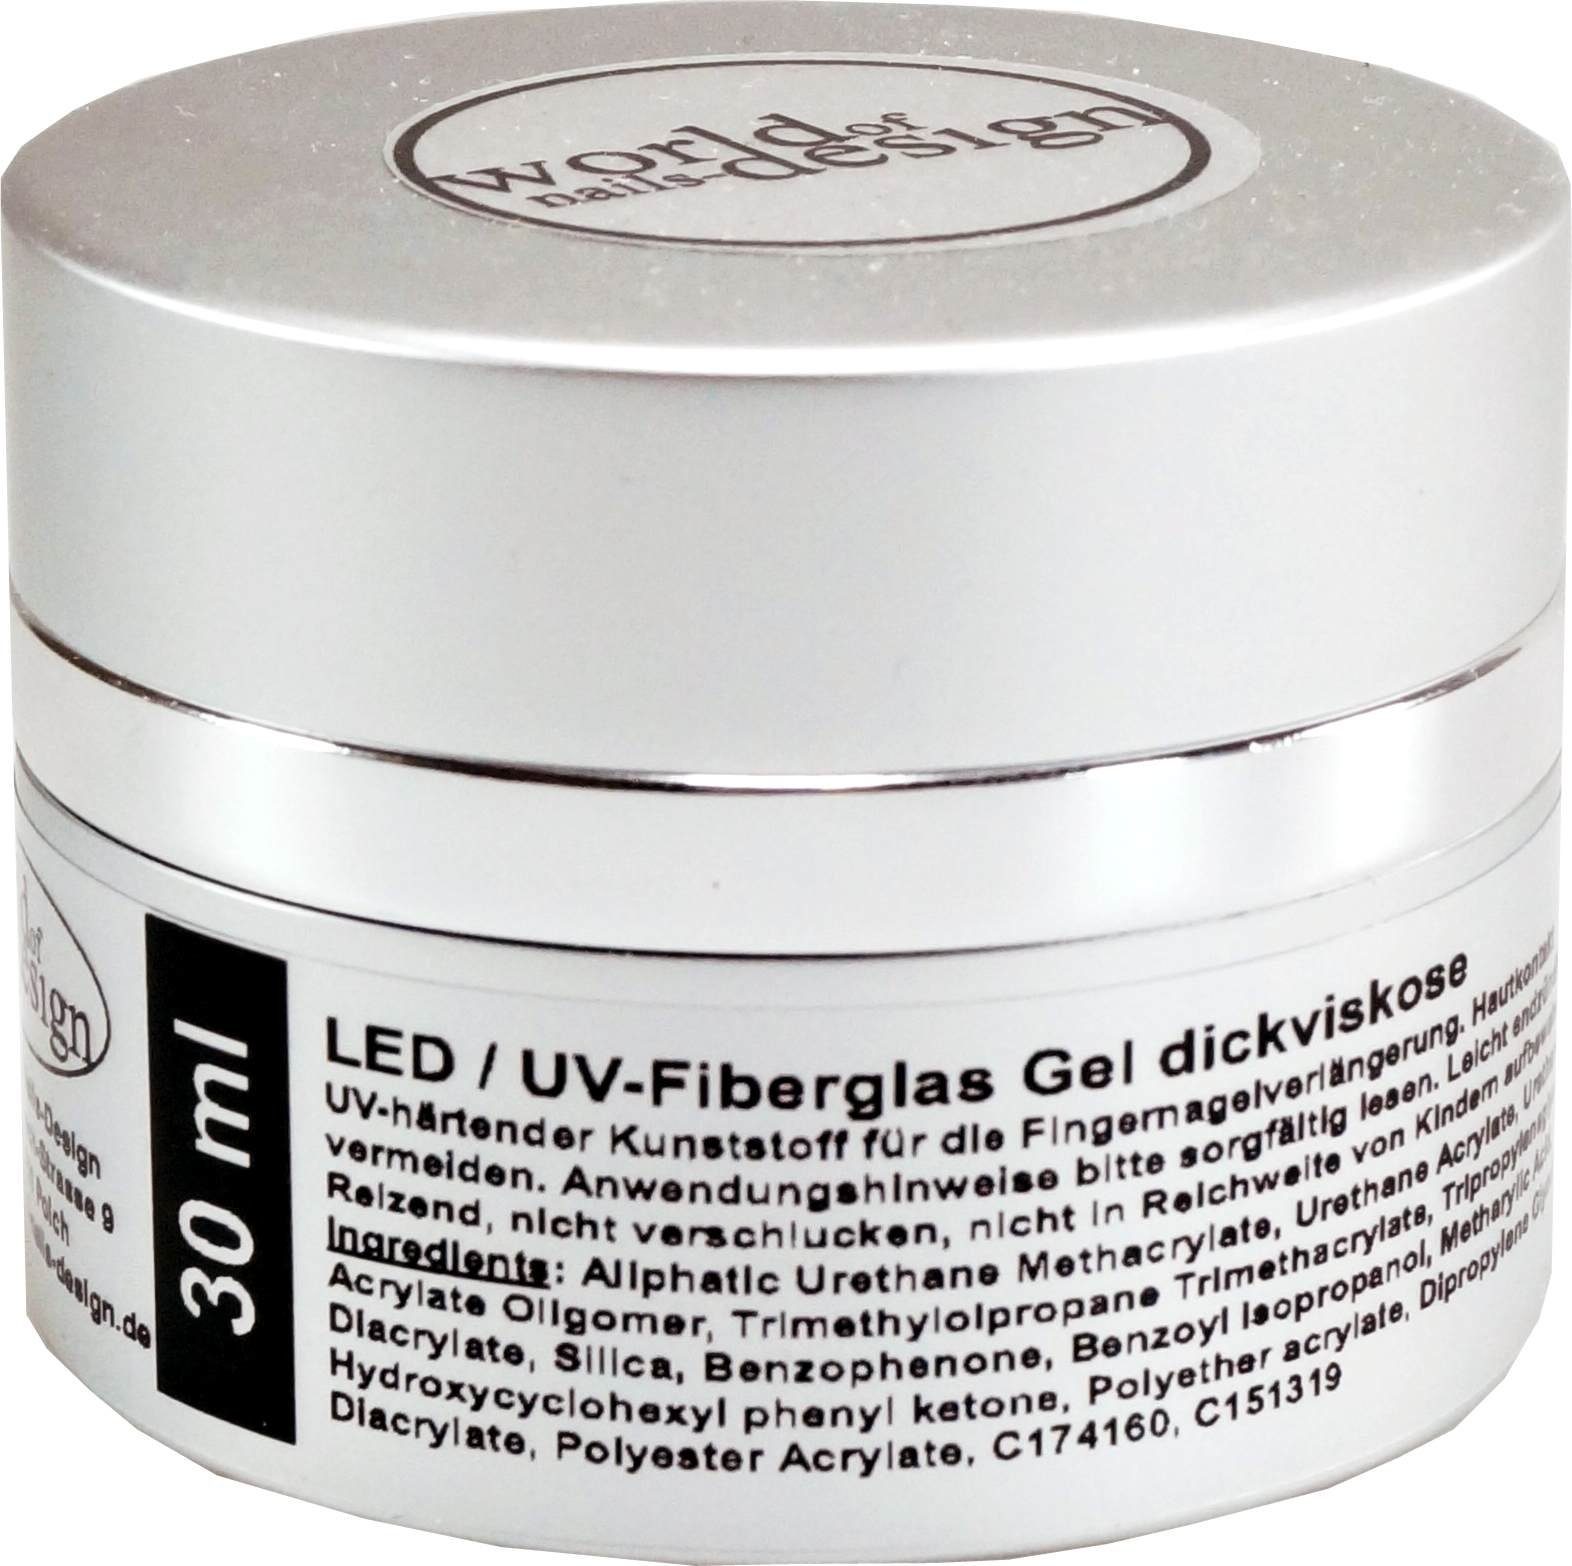 dickviskose Fiberglas of World 30ml klar StudioLine LED/UV-Gel Nails-Design UV-Gel